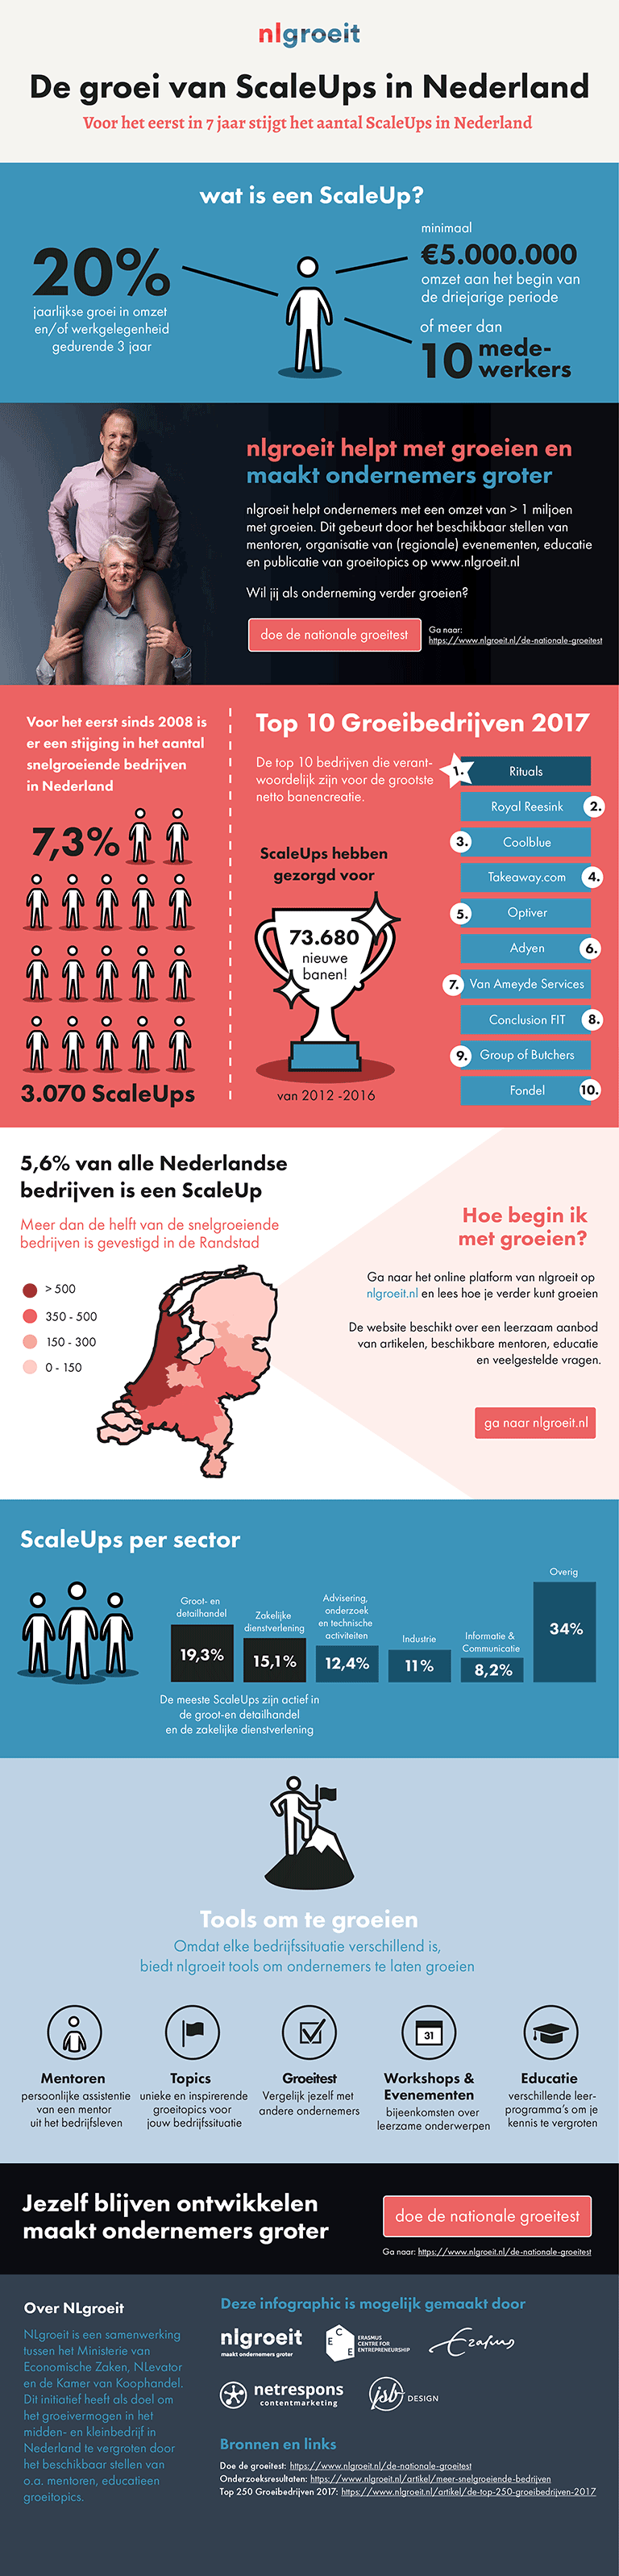 Aantal scale-ups in Nederland groeit weer (infographic)